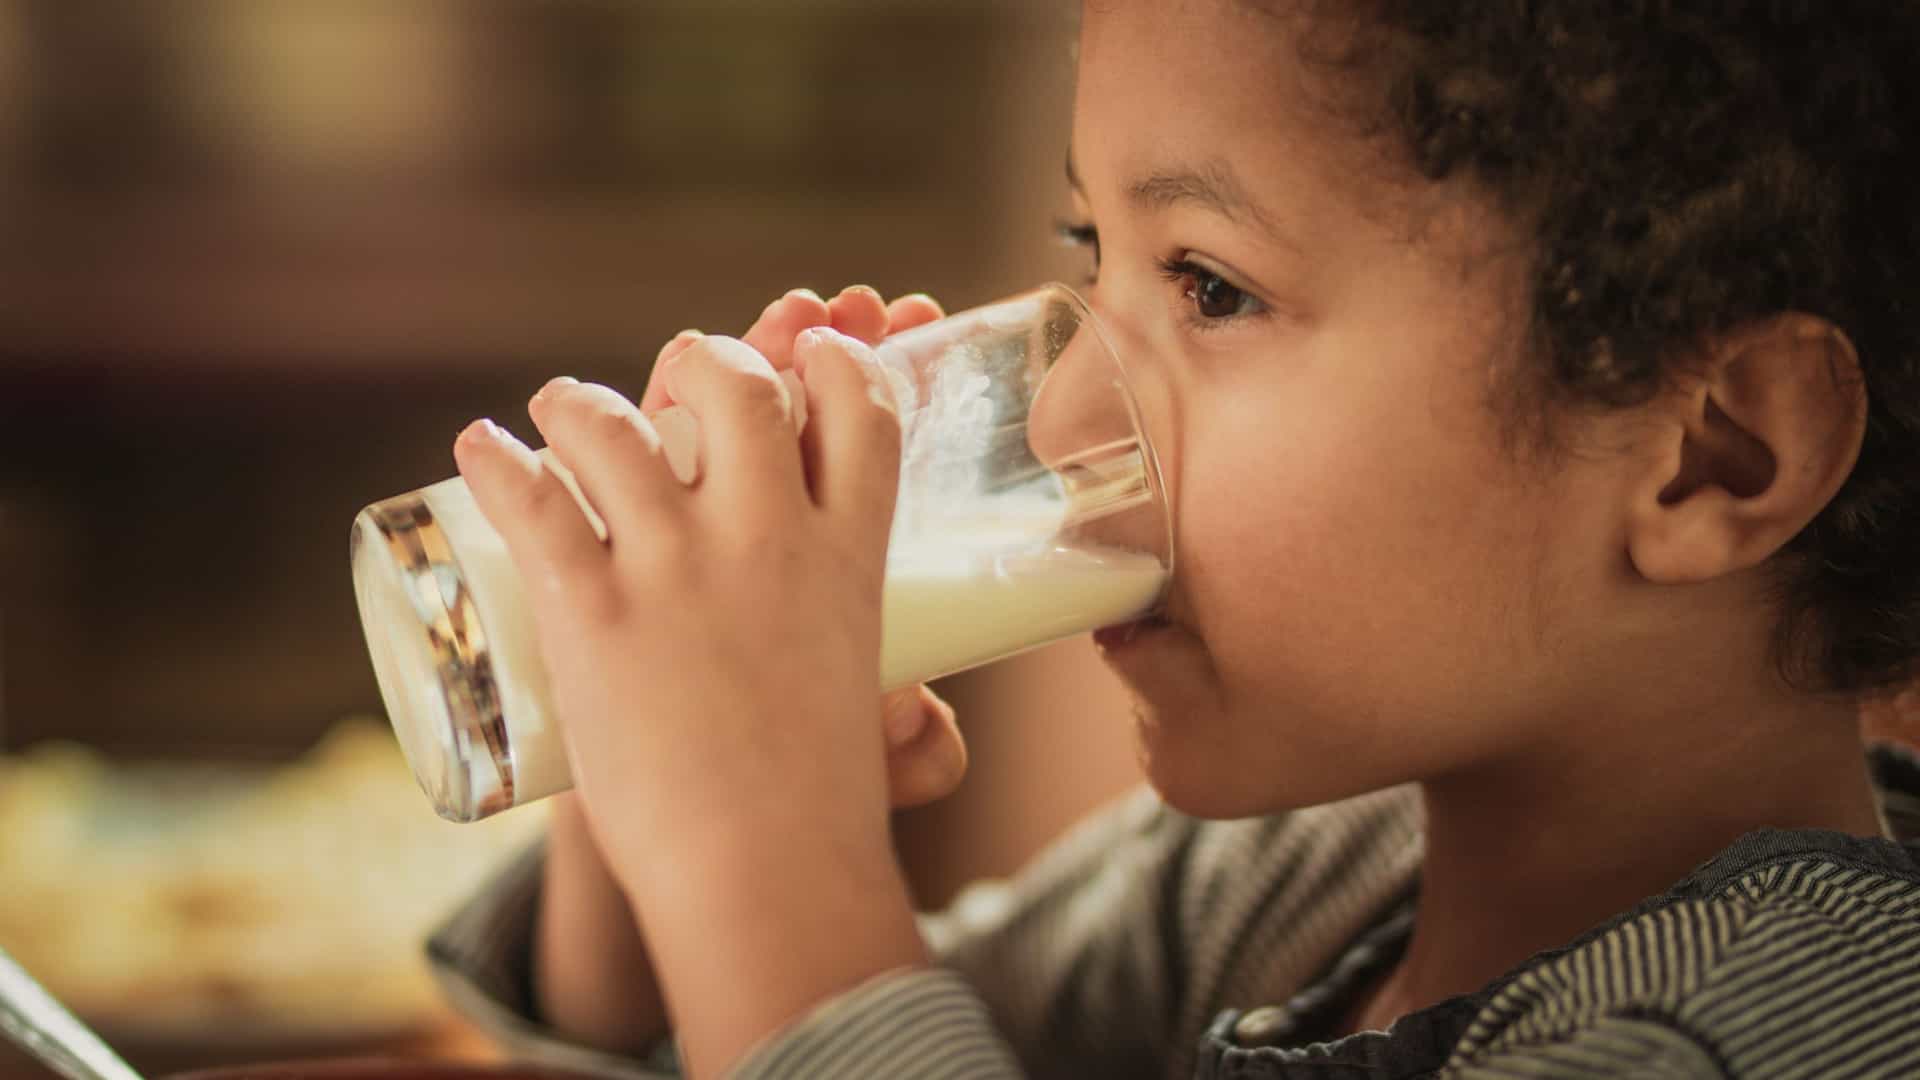 Alergia à proteína do leite é diferente de intolerância a lactose.